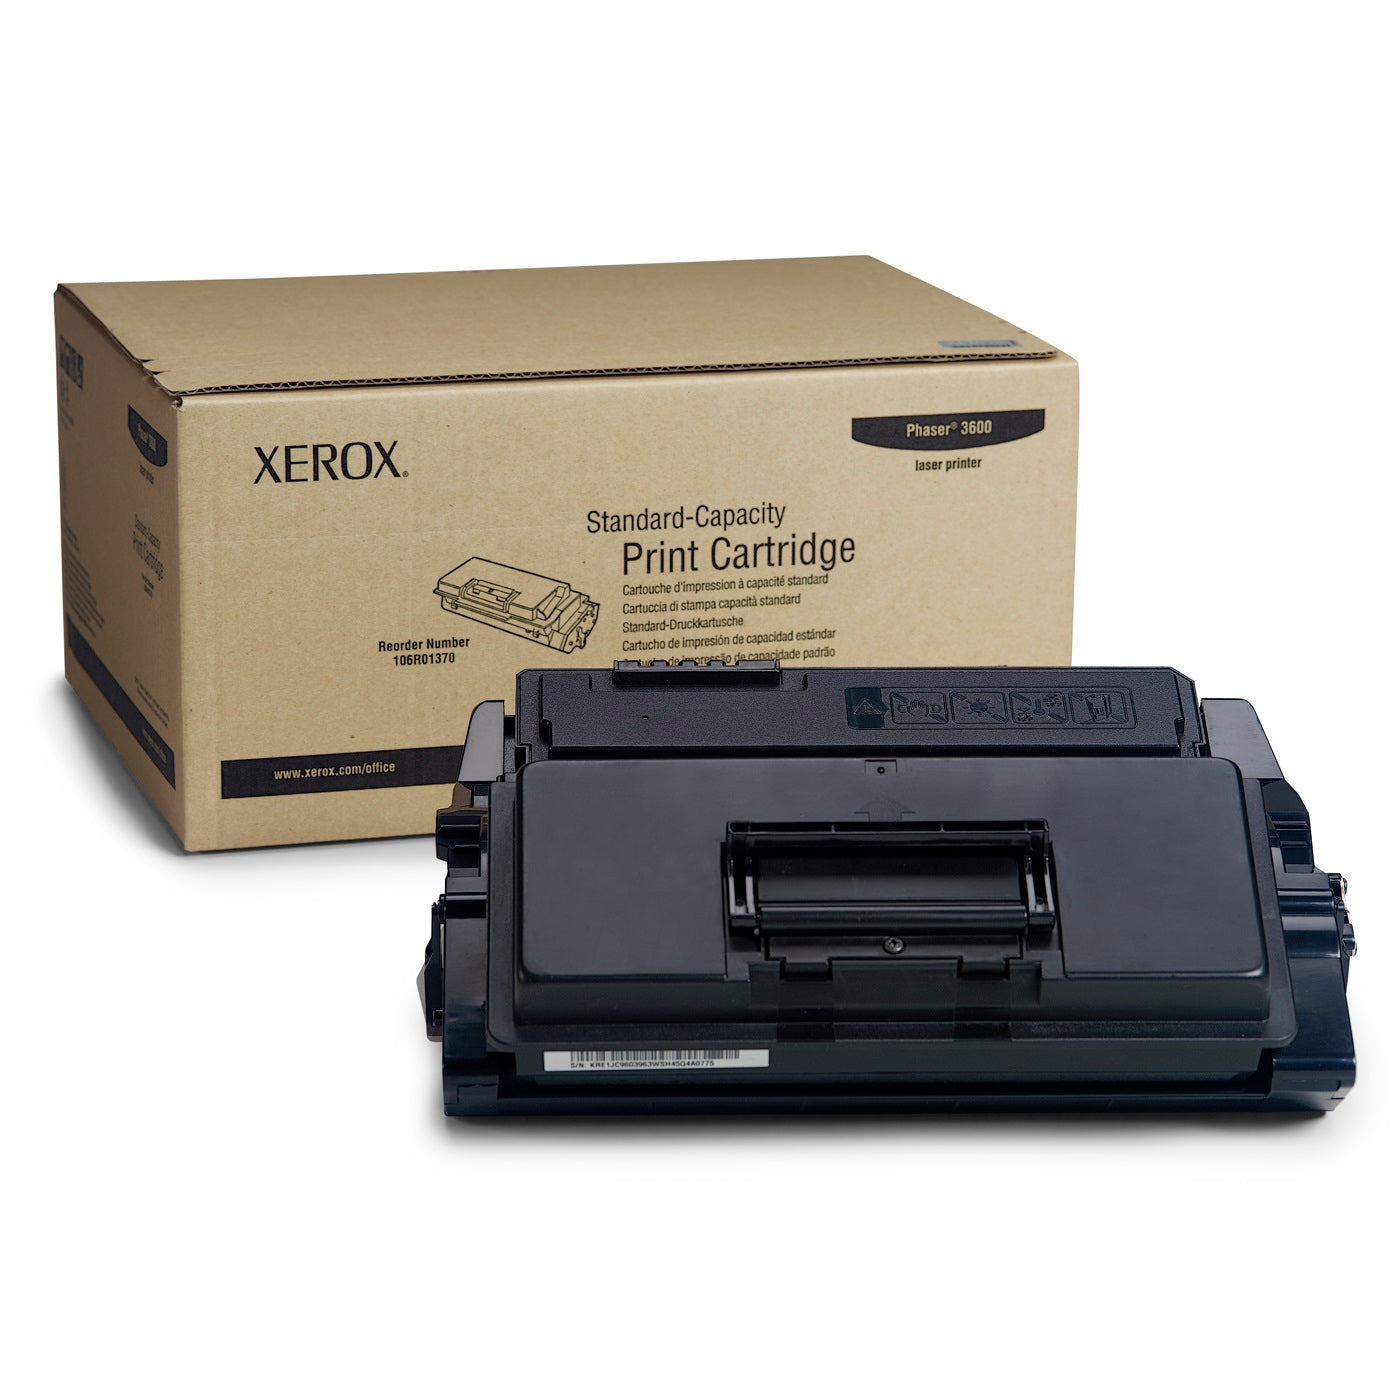 Absolute Toner Genuine Xerox 106R01370 Black Toner Cartridge For Phaser 3600 | Original OEM Original Xerox Cartridges